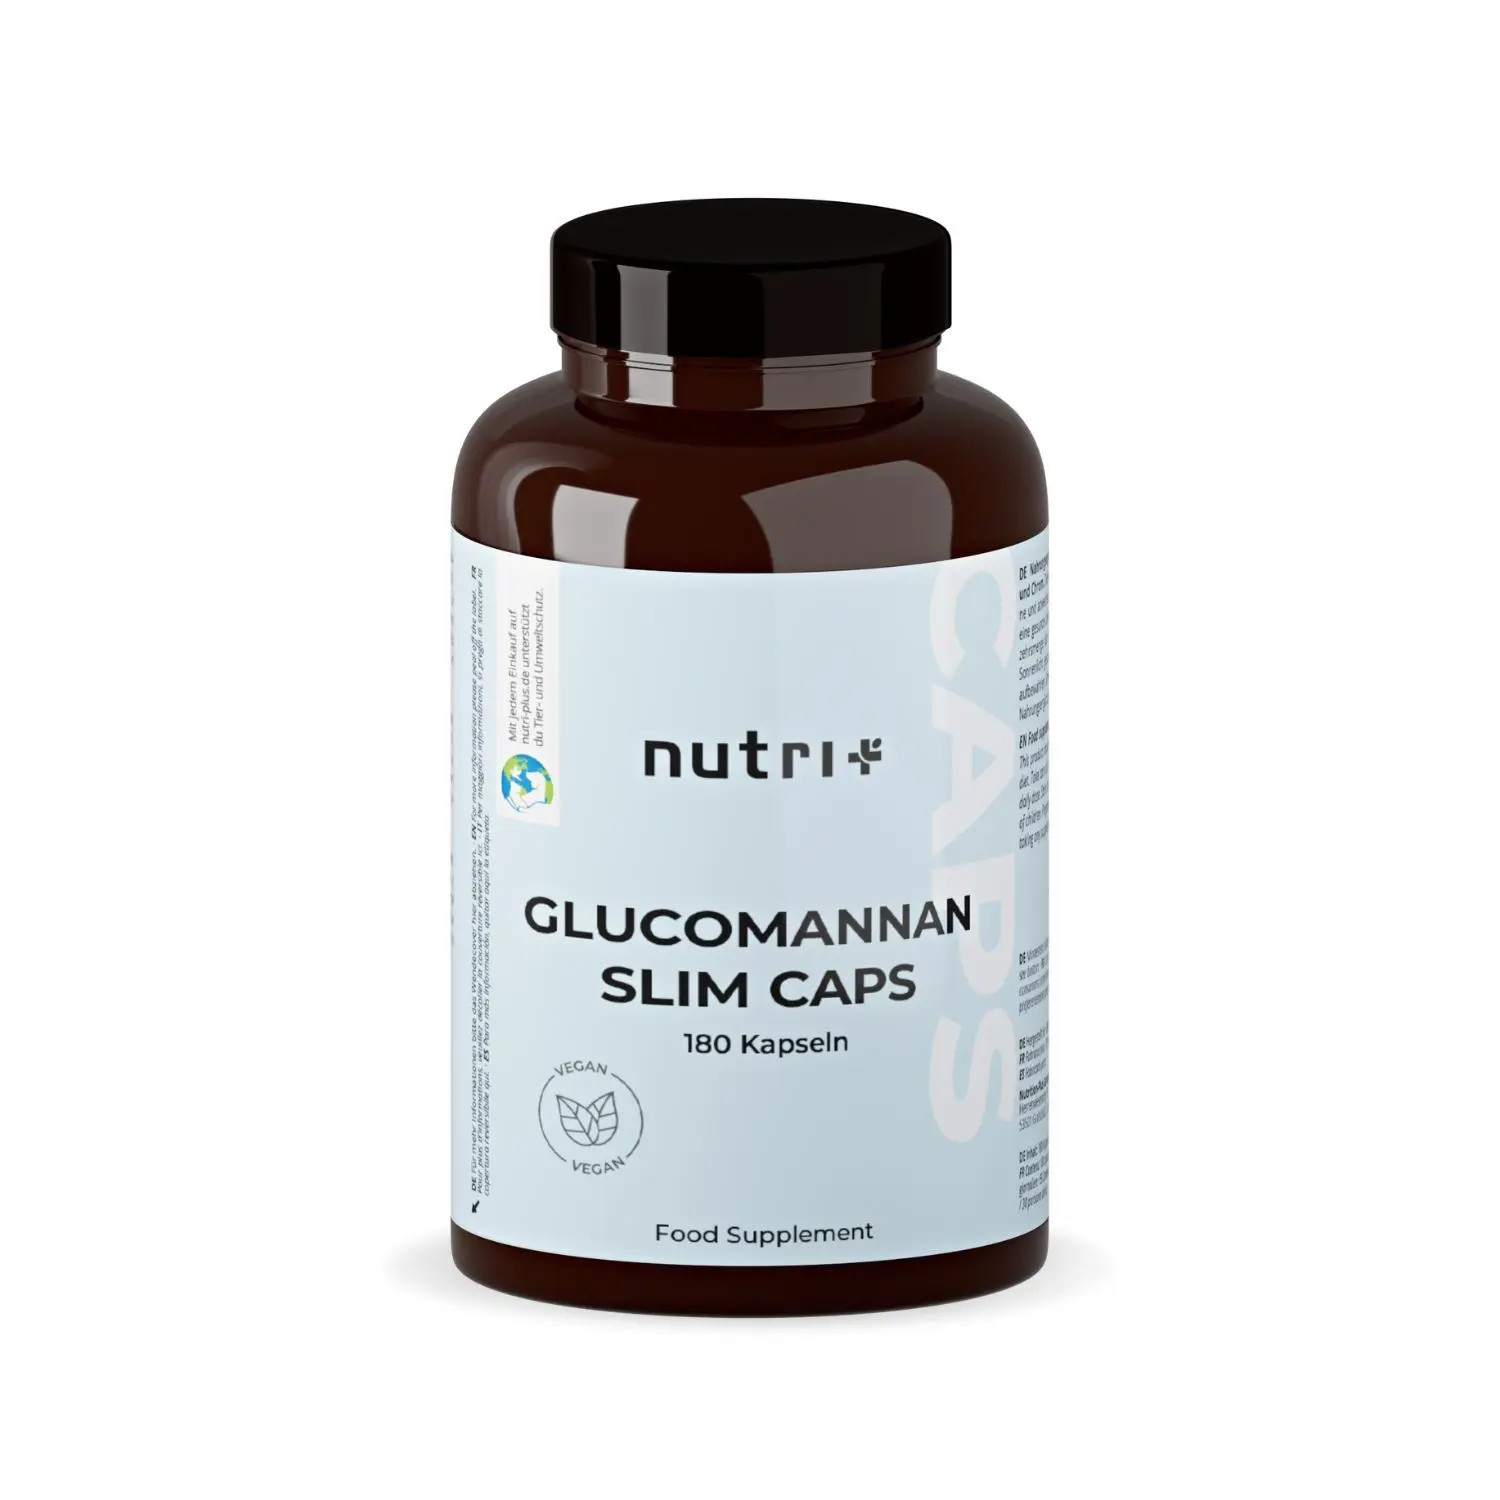 nutri+ Glucomannan Slim Caps | 180 Kapseln | Appetitzügler & Gewichtsabnahme Unterstützung mit Glucomannan